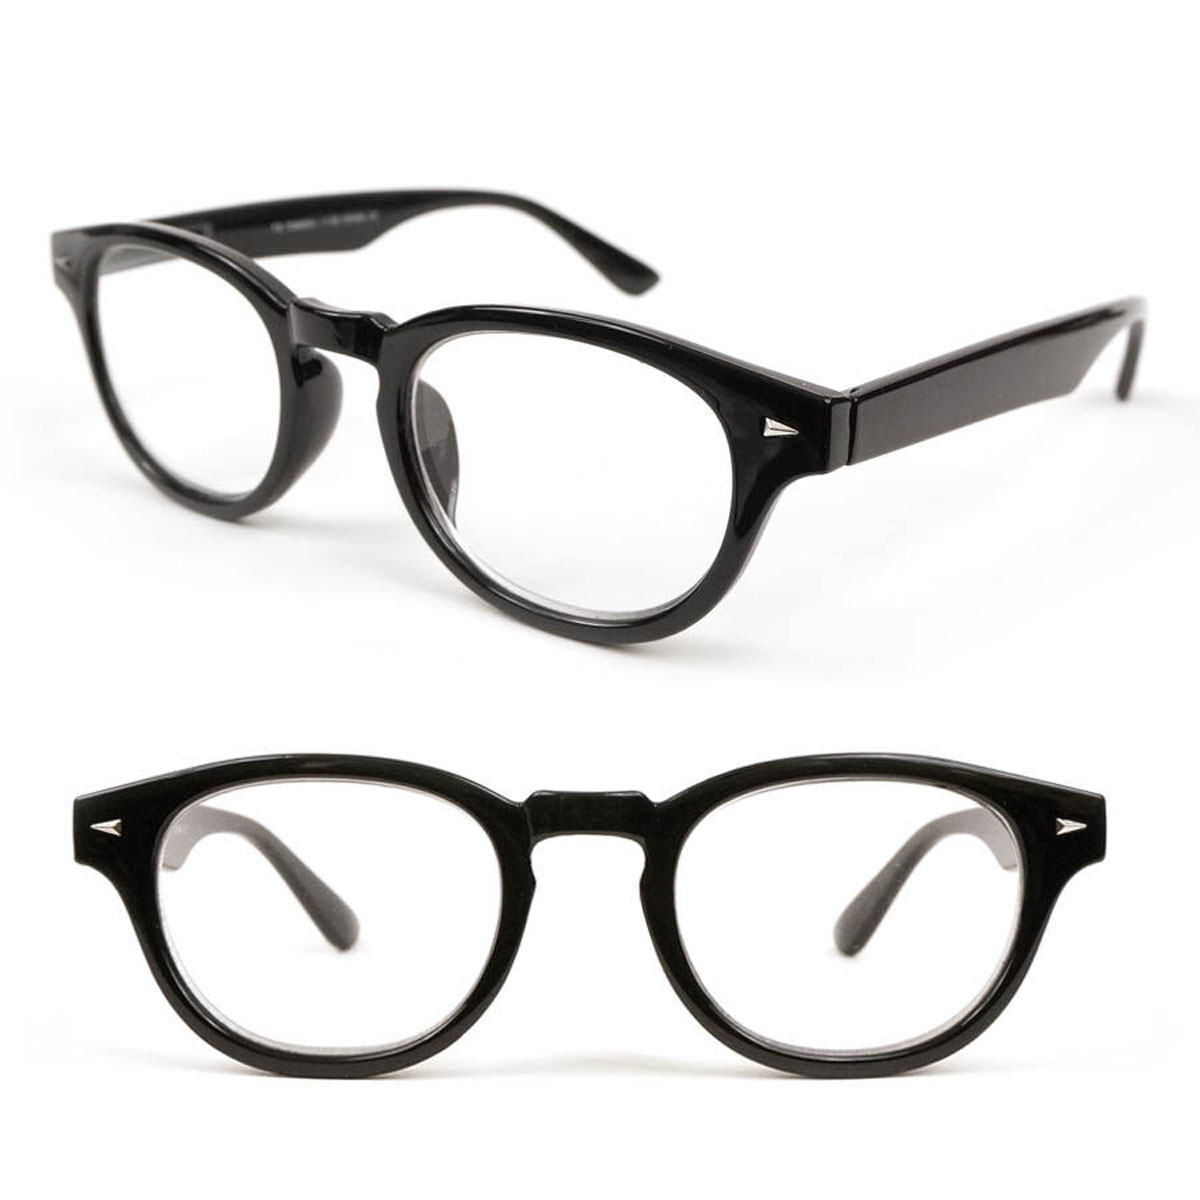 Medium Round Classic Frame Reading Glasses Geek Retro Vintage Style 100-375 - Black, +2.50